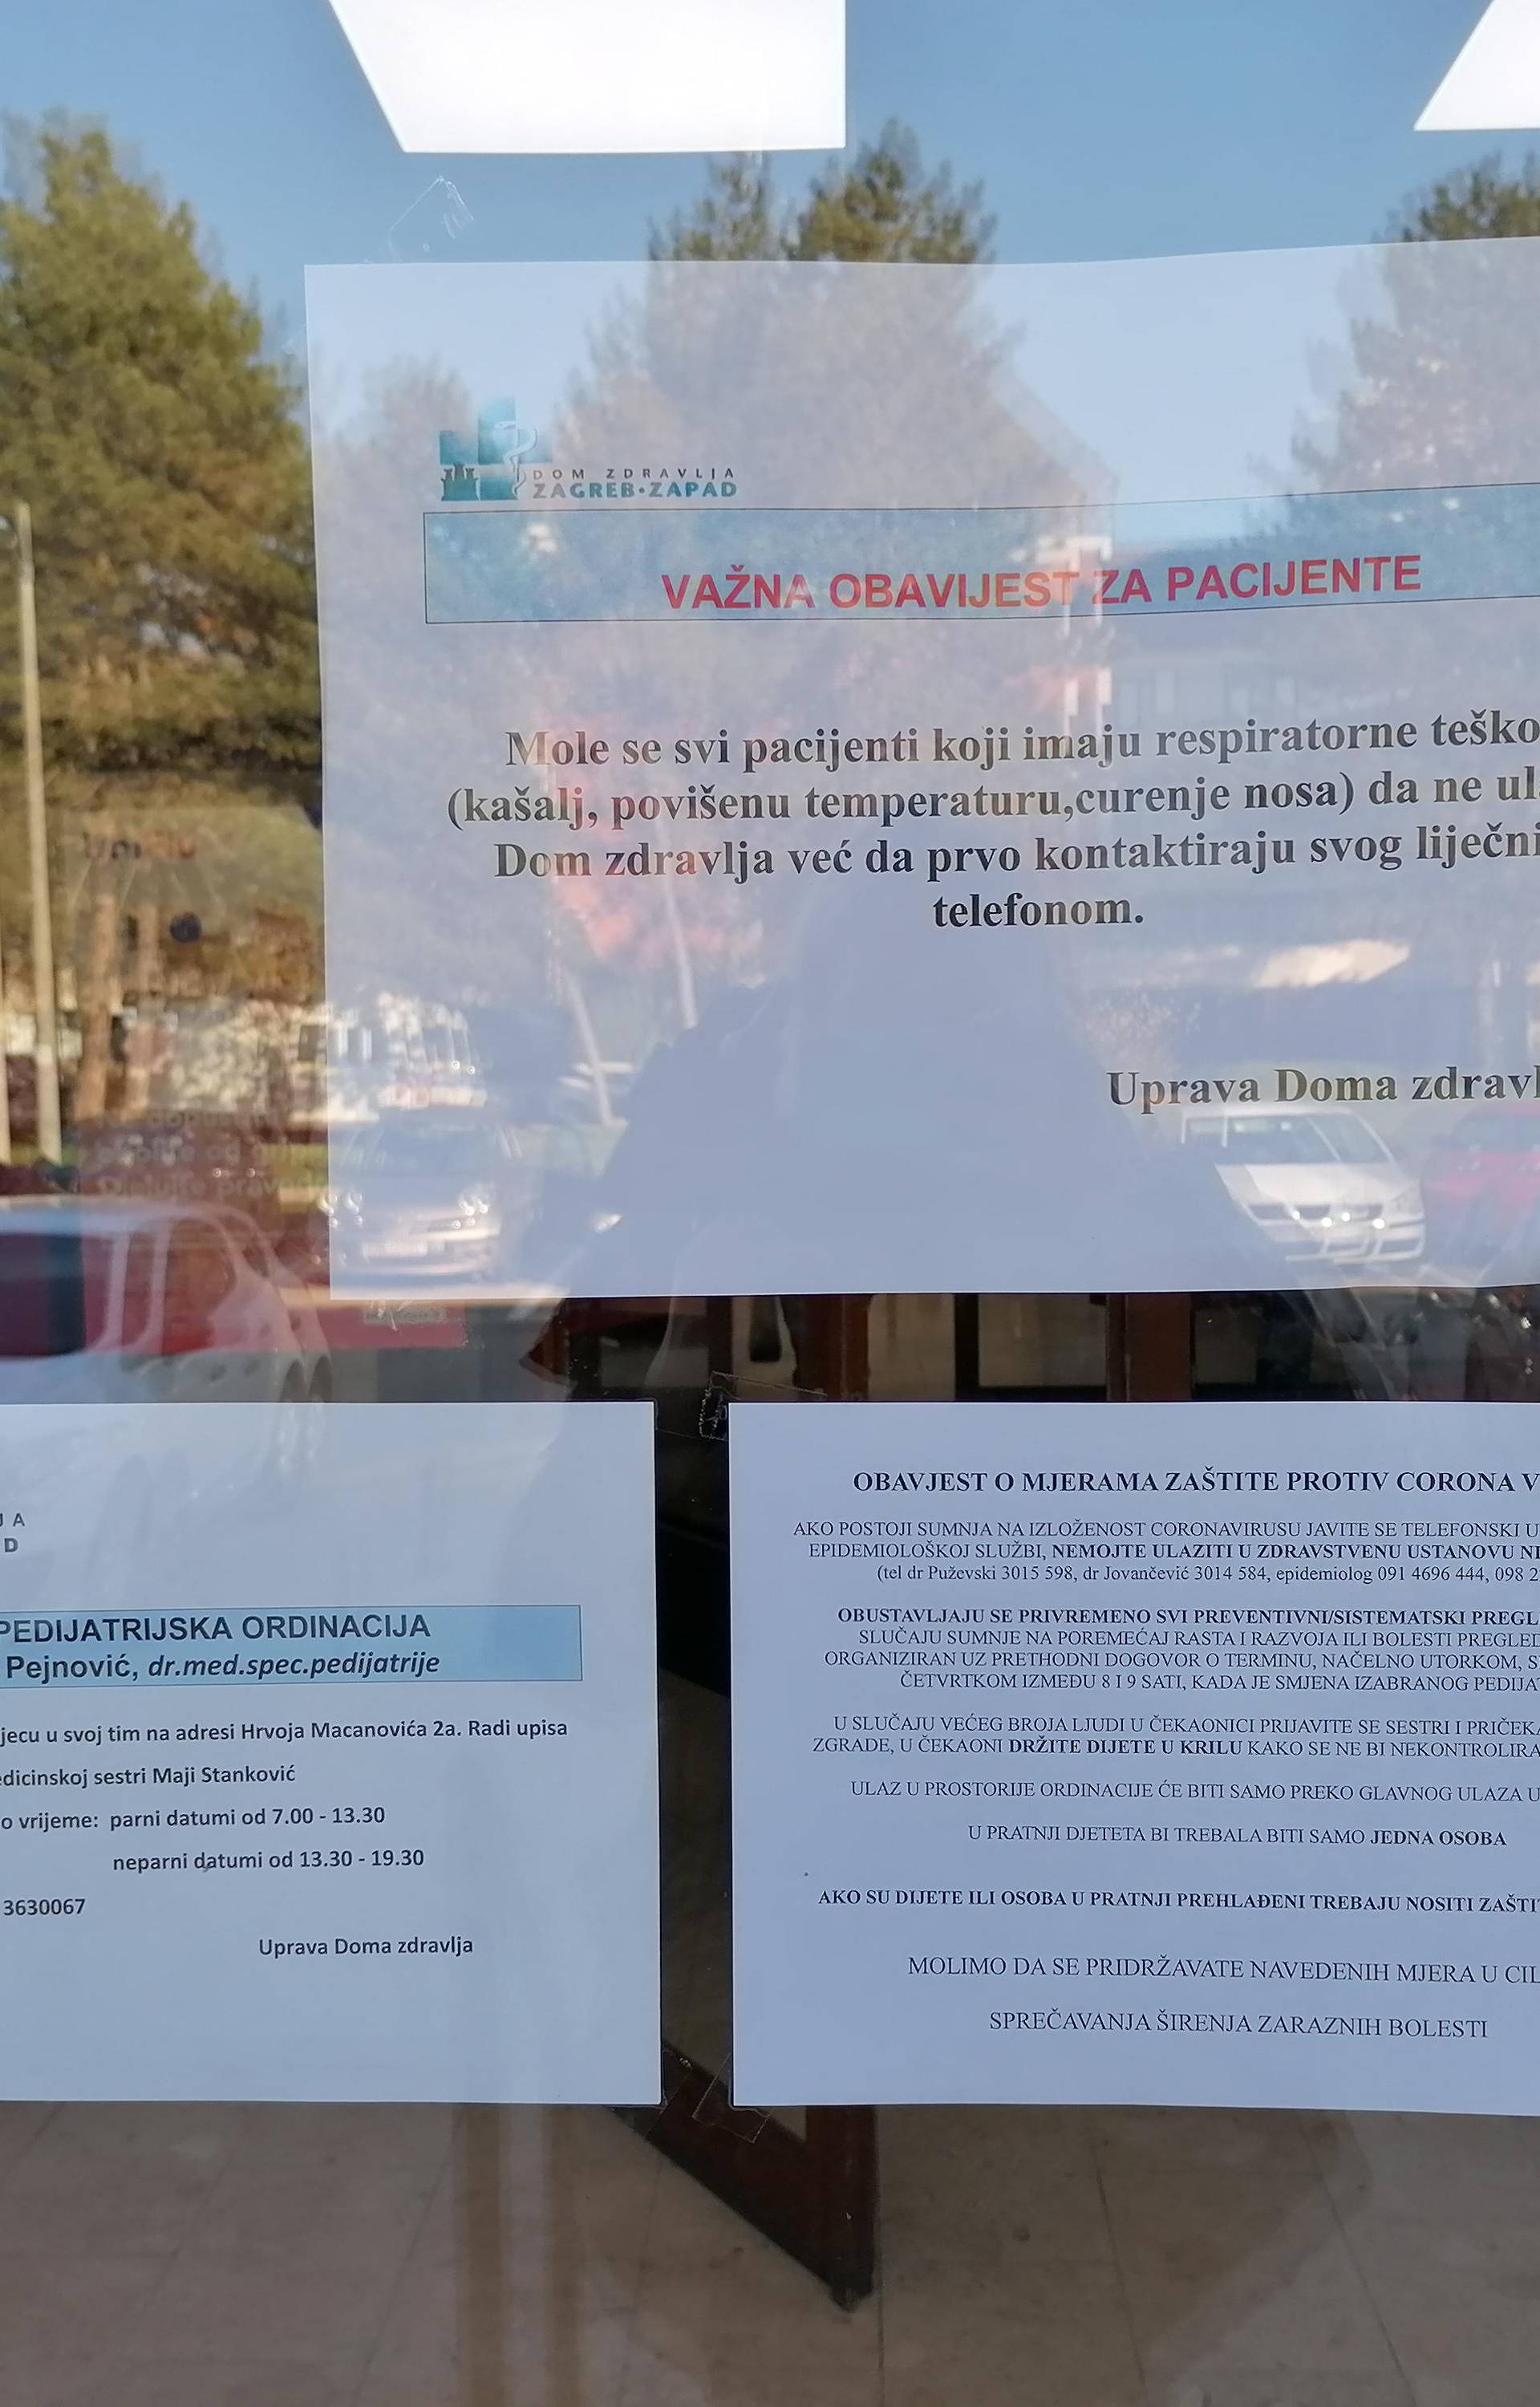 Pomutnja u Zagrebu: Ovdje se ne rade testovi, nego pregledi